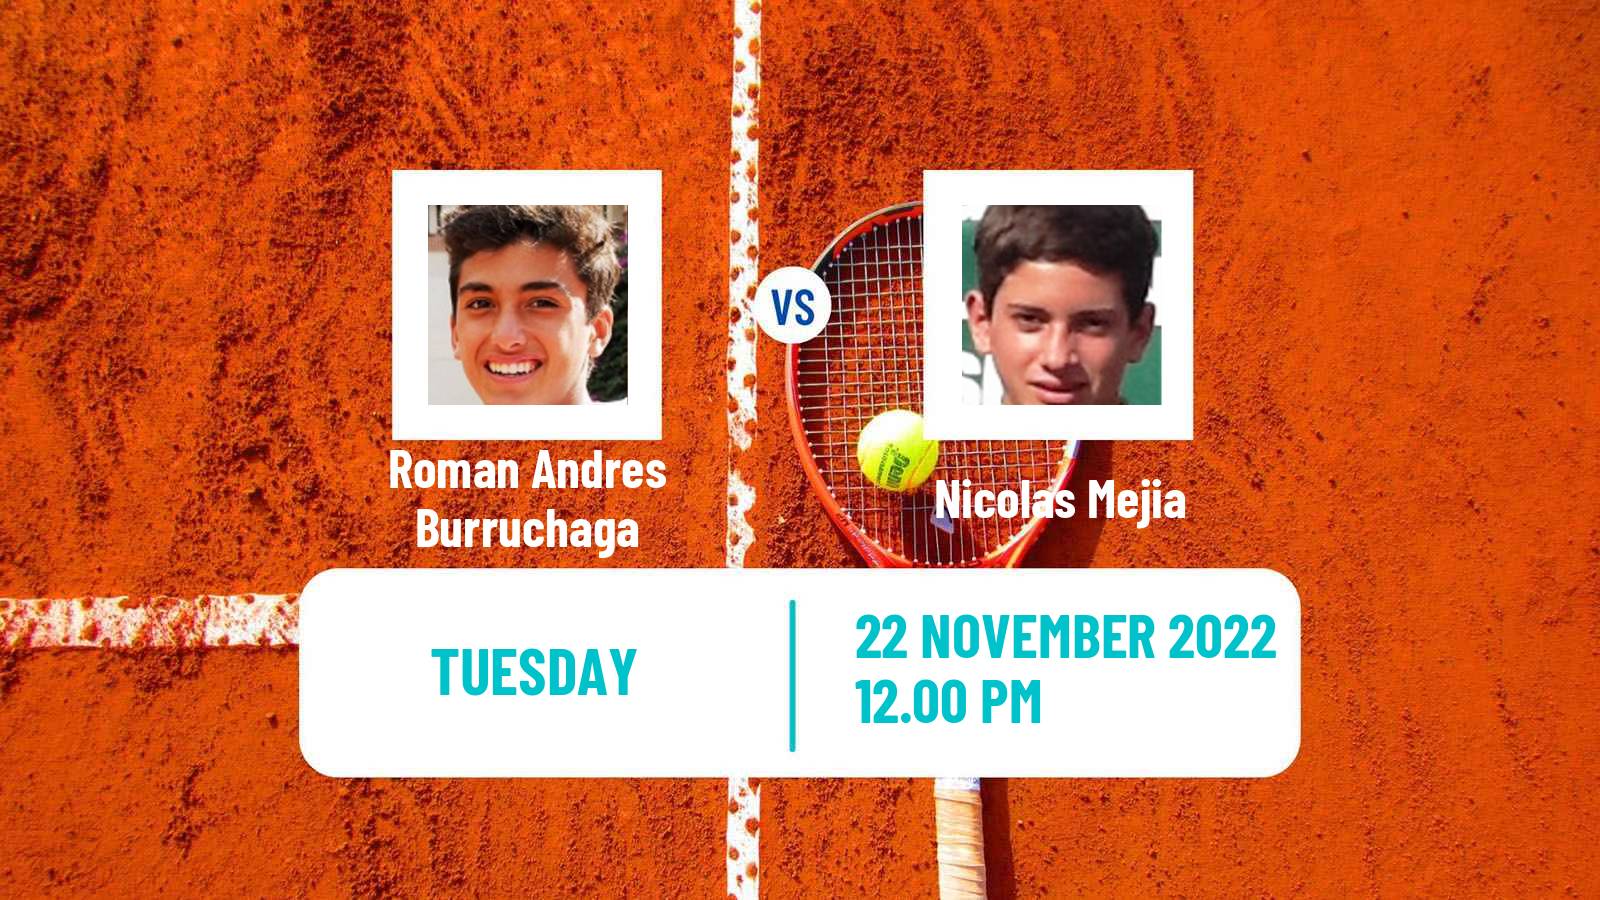 Tennis ATP Challenger Roman Andres Burruchaga - Nicolas Mejia